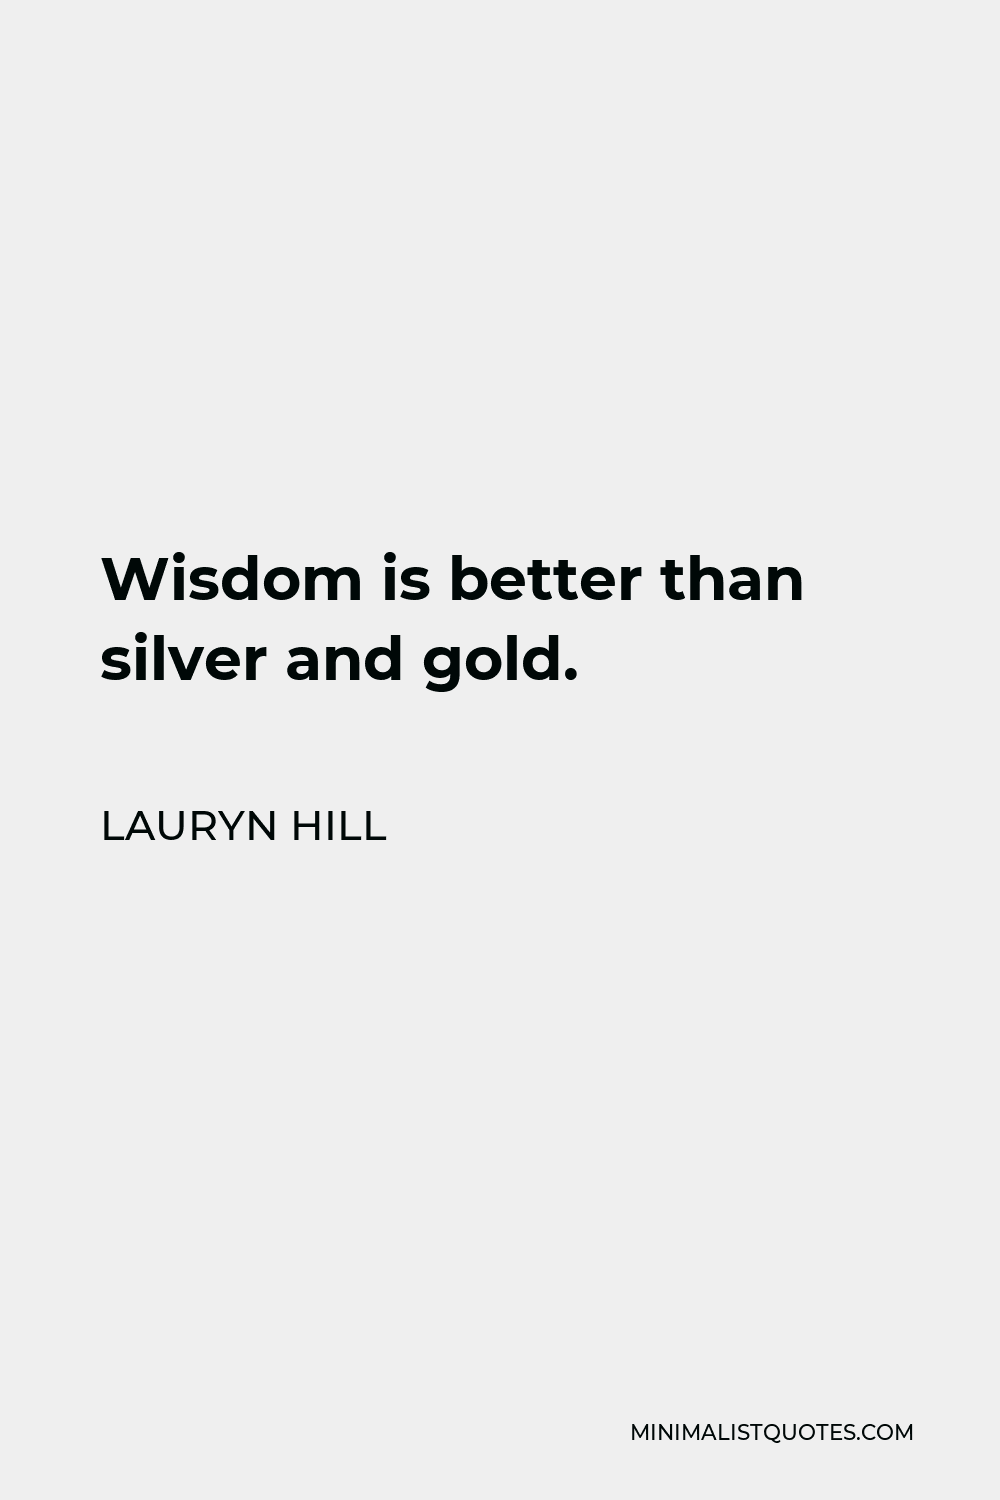 God’s Wisdom Is Better than Gold: God's Way to Health, True Wealth, & Wisdom